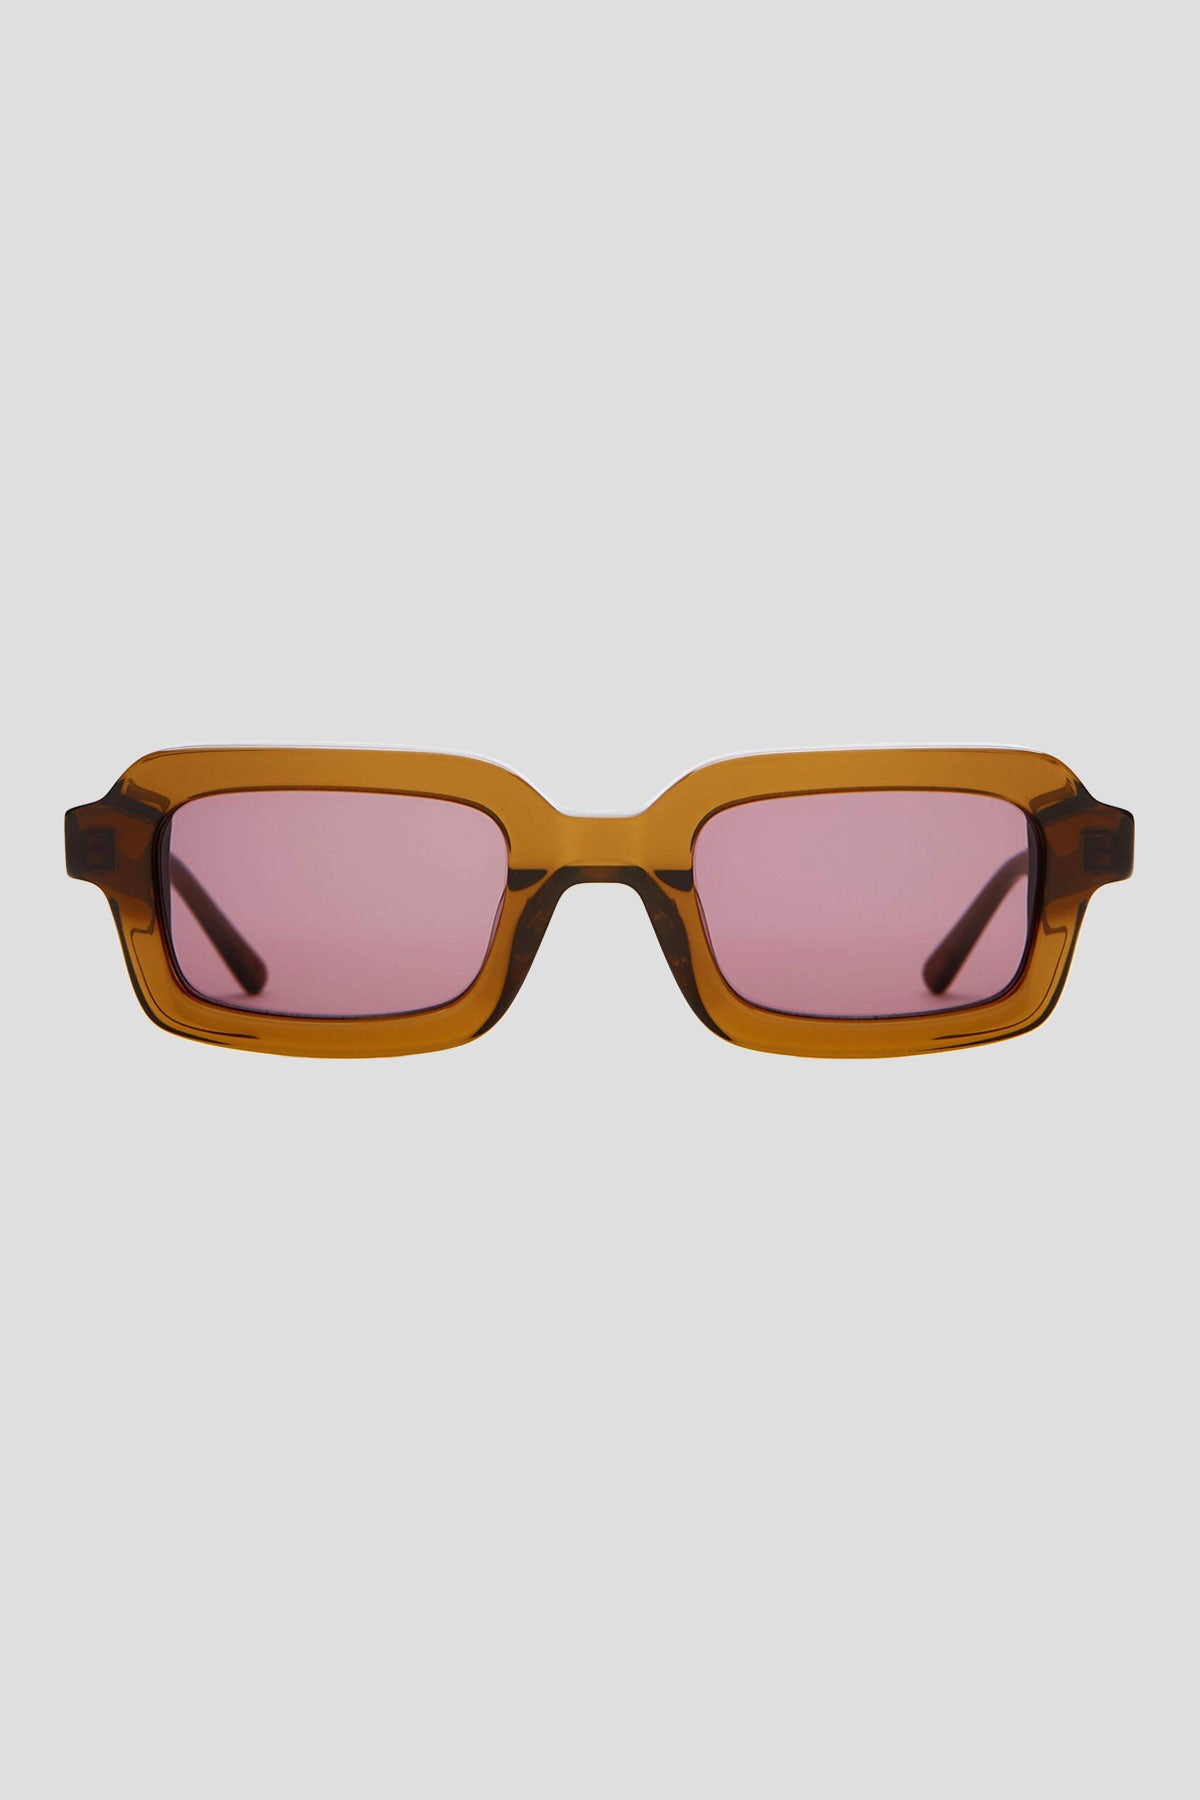 Lucid Blur Sunglasses